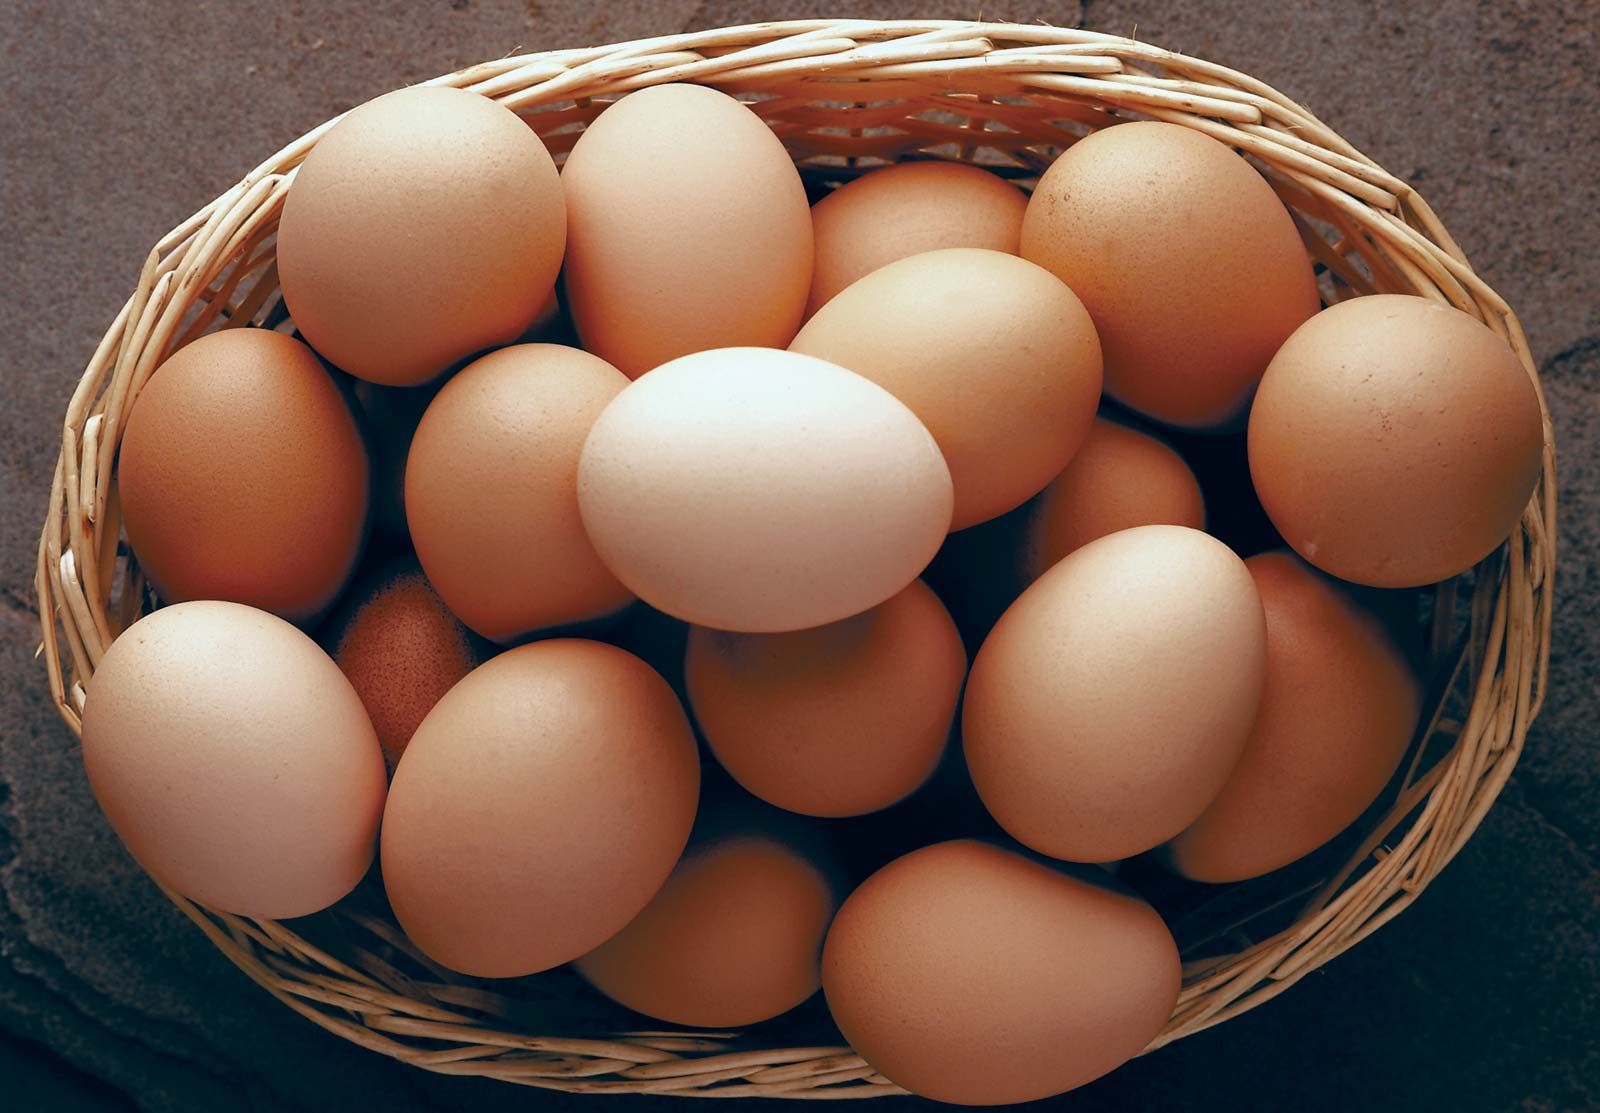 Egg | Definition, Characteristics, & Nutritional Content | Britannica